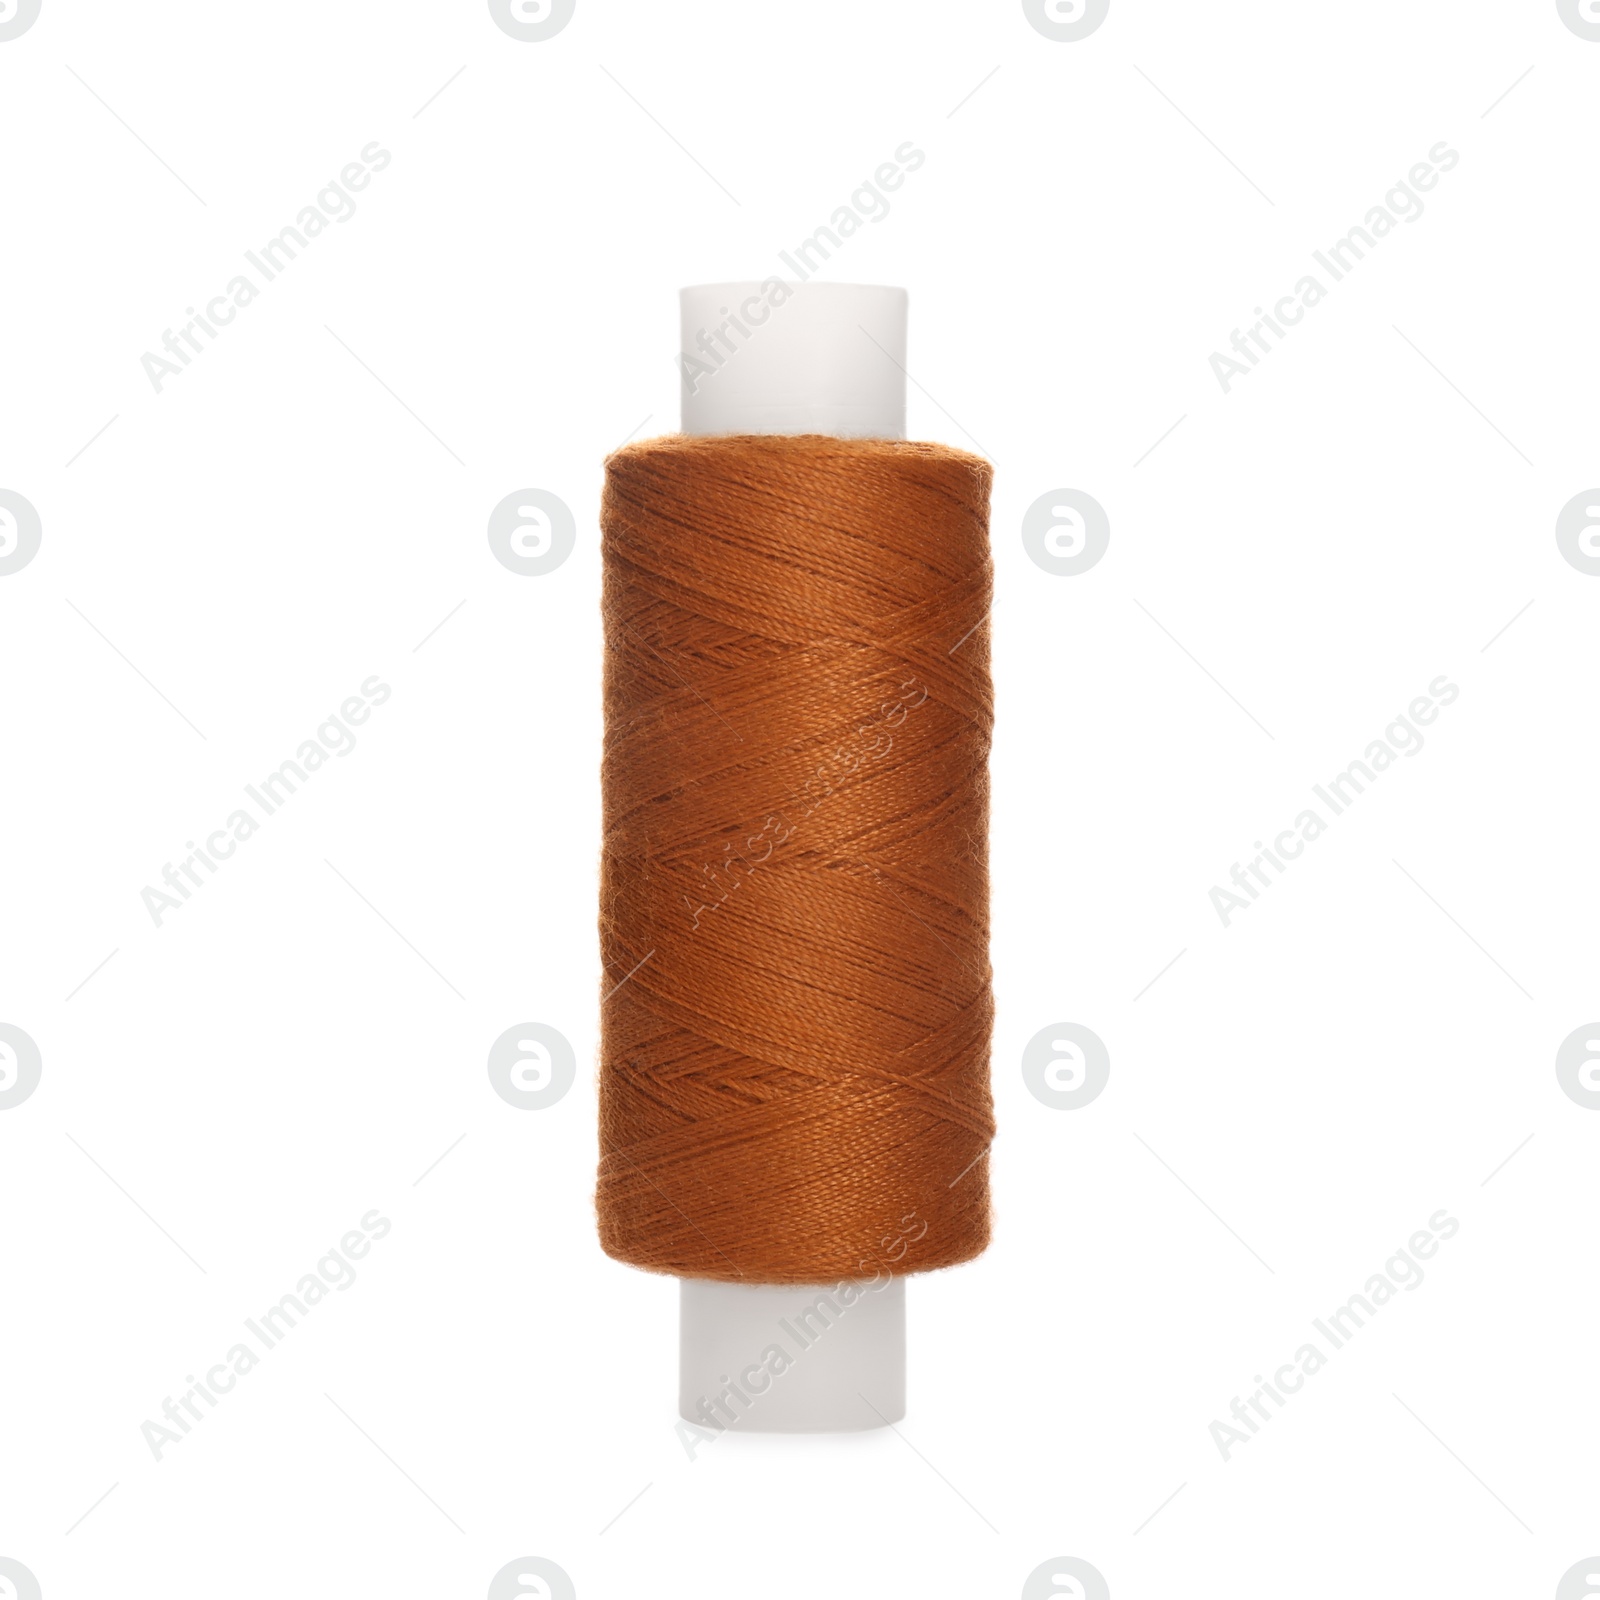 Photo of Spool of dark orange sewing thread isolated on white